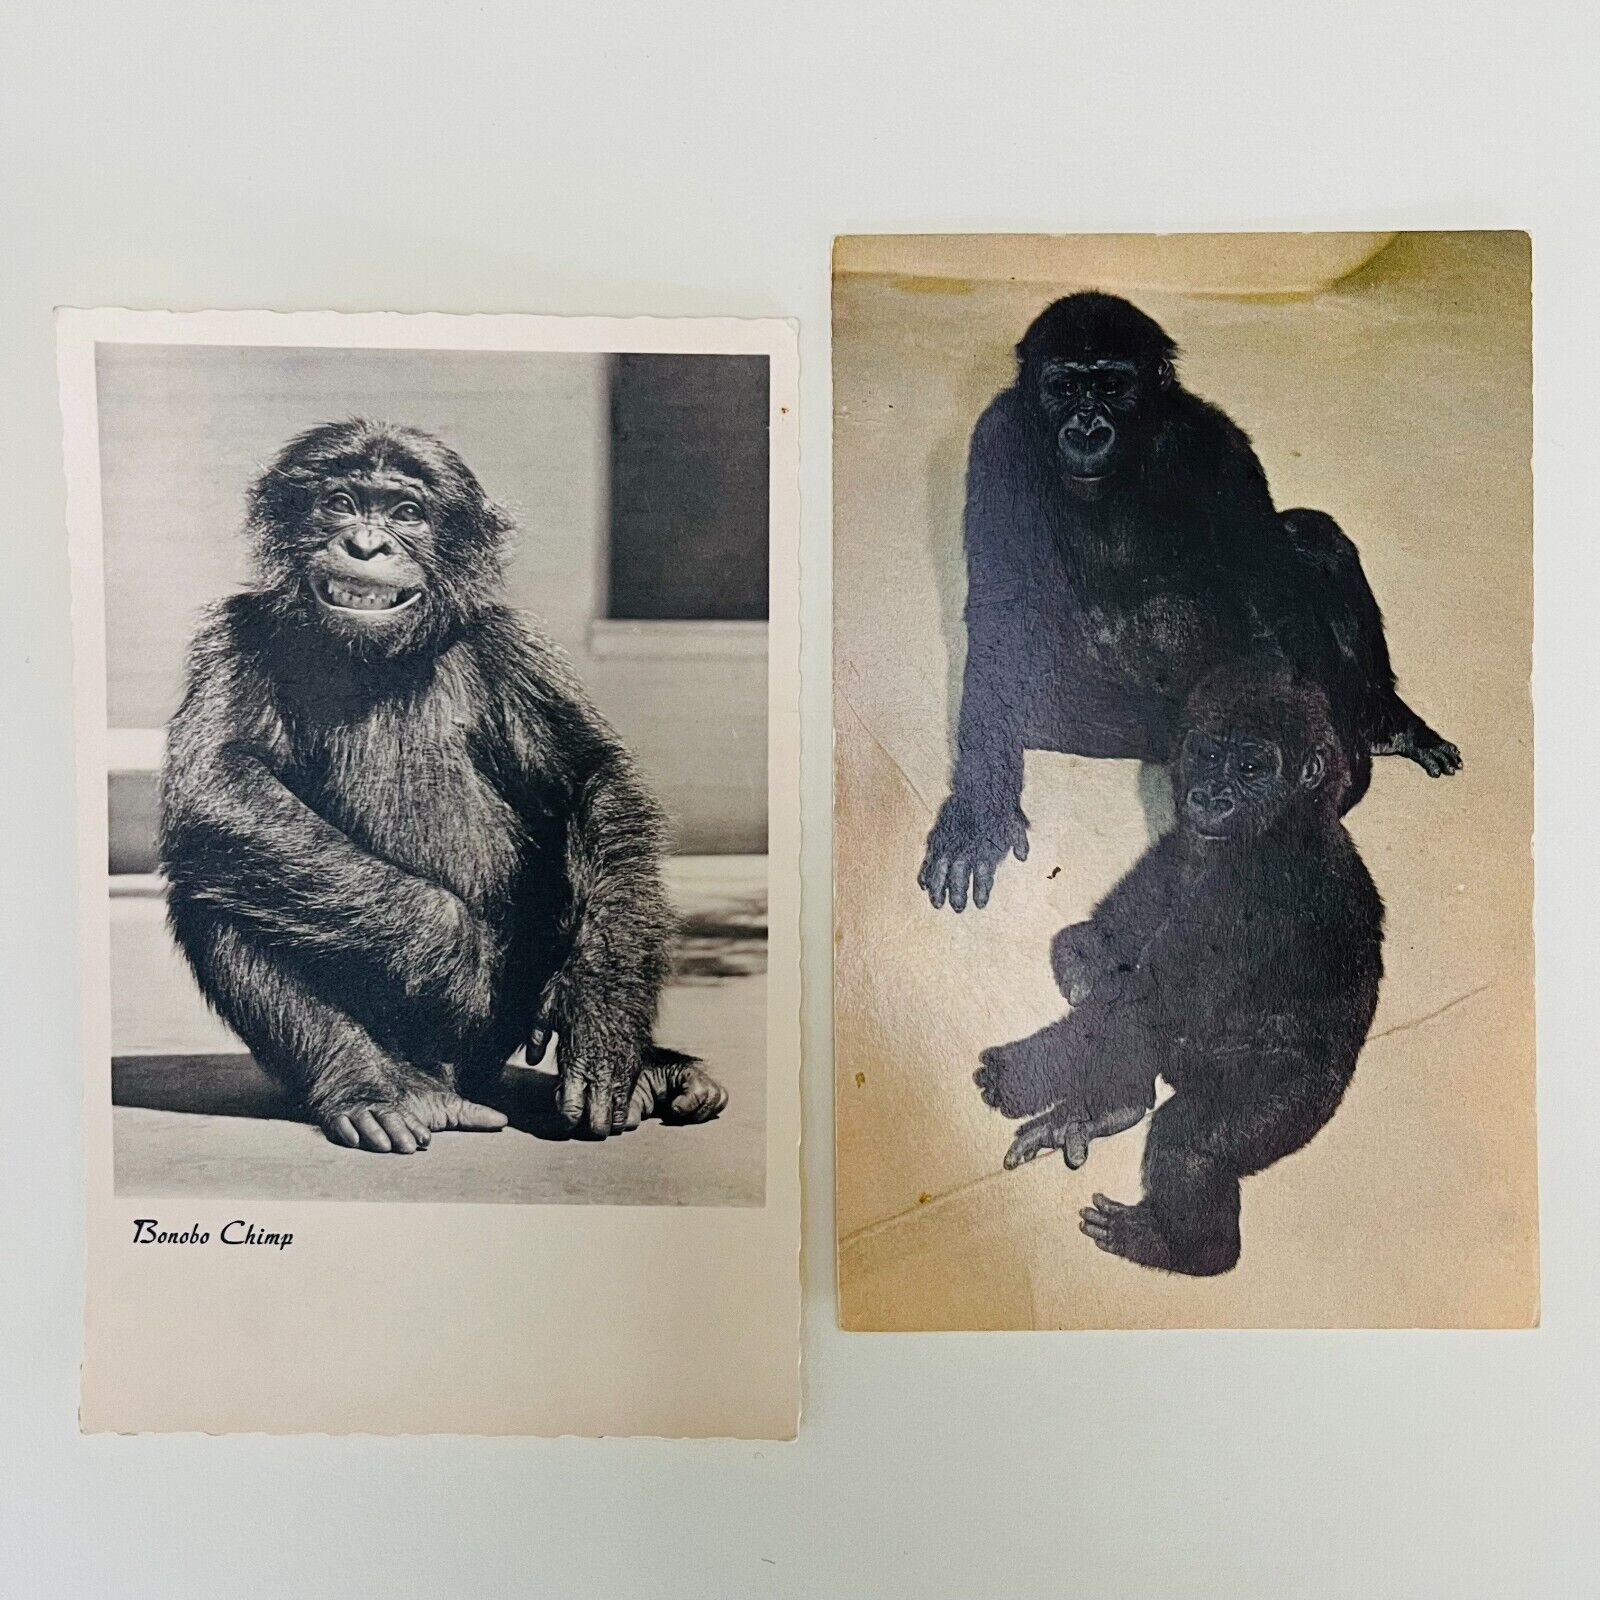 Lot of 2 Vintage Monkey Postcards - Baby Gorilla's San Diego Zoo - Bonobo Chimp